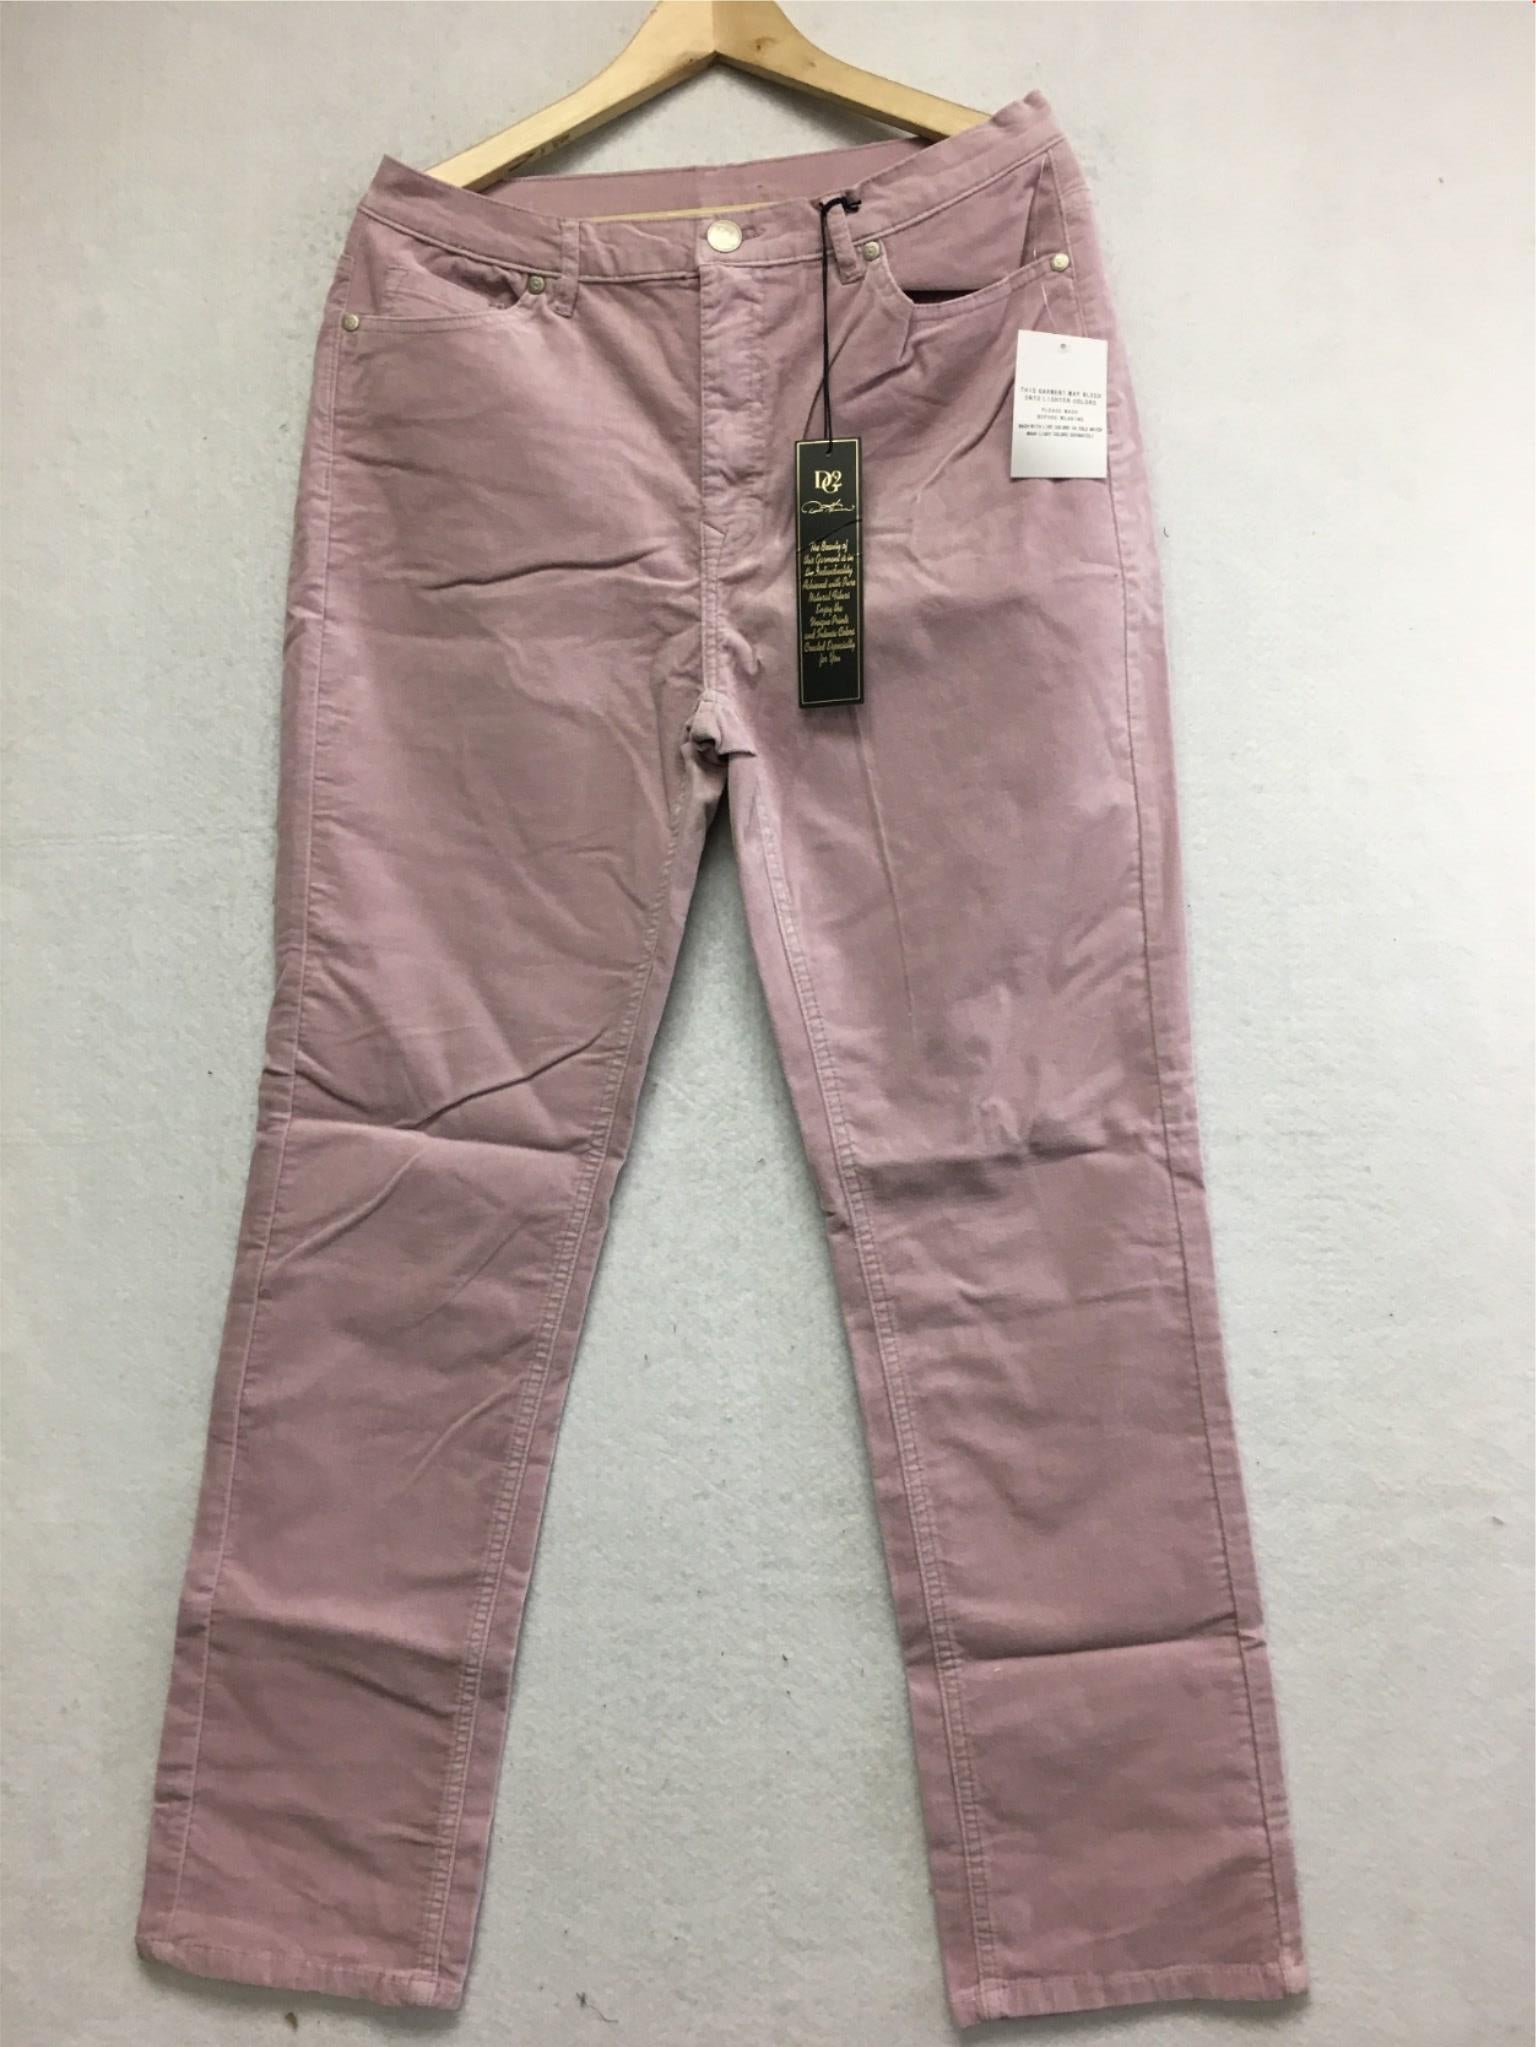 New DG2 Quad Blend Straight Rose Pant Size 12